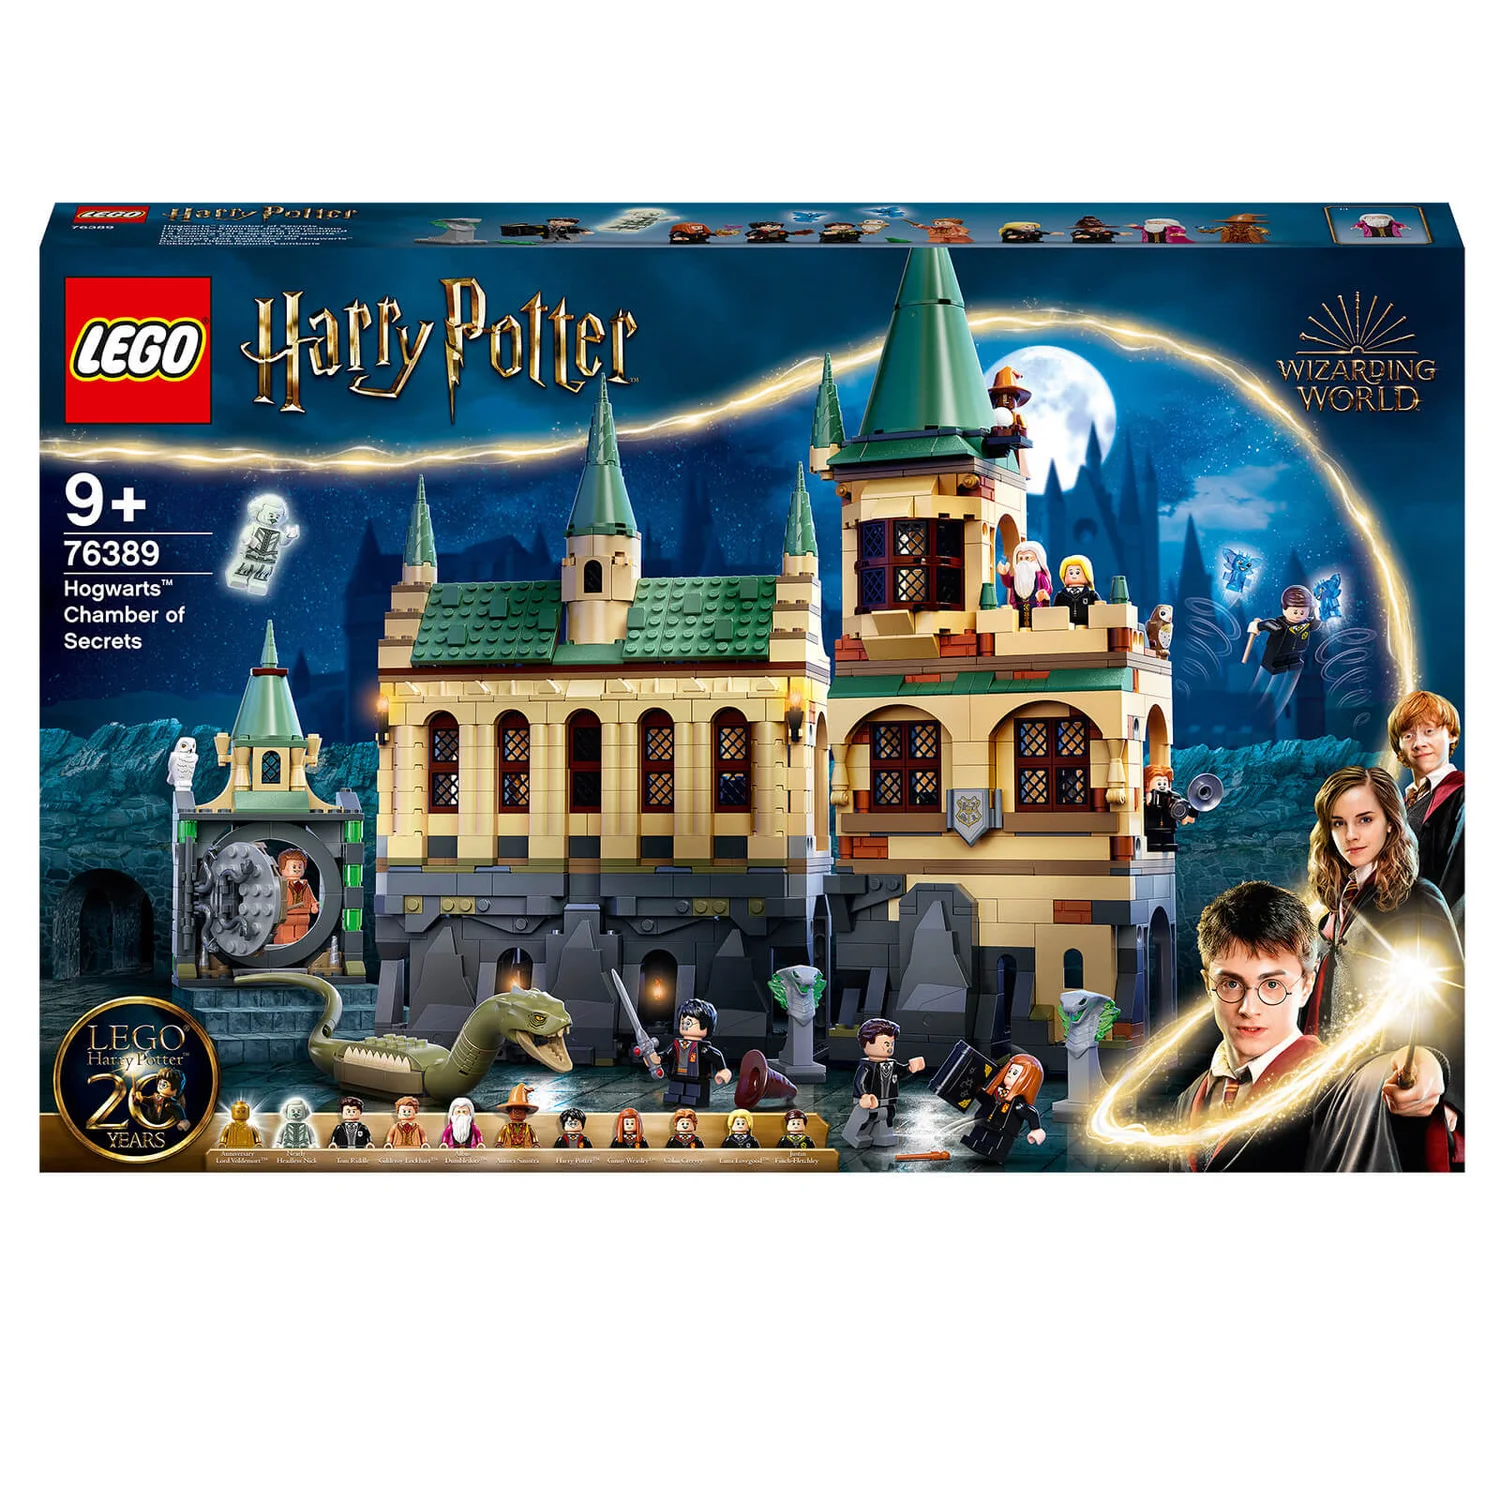 Save $40 on this huge LEGO Harry Potter Set From ZAVVI.com